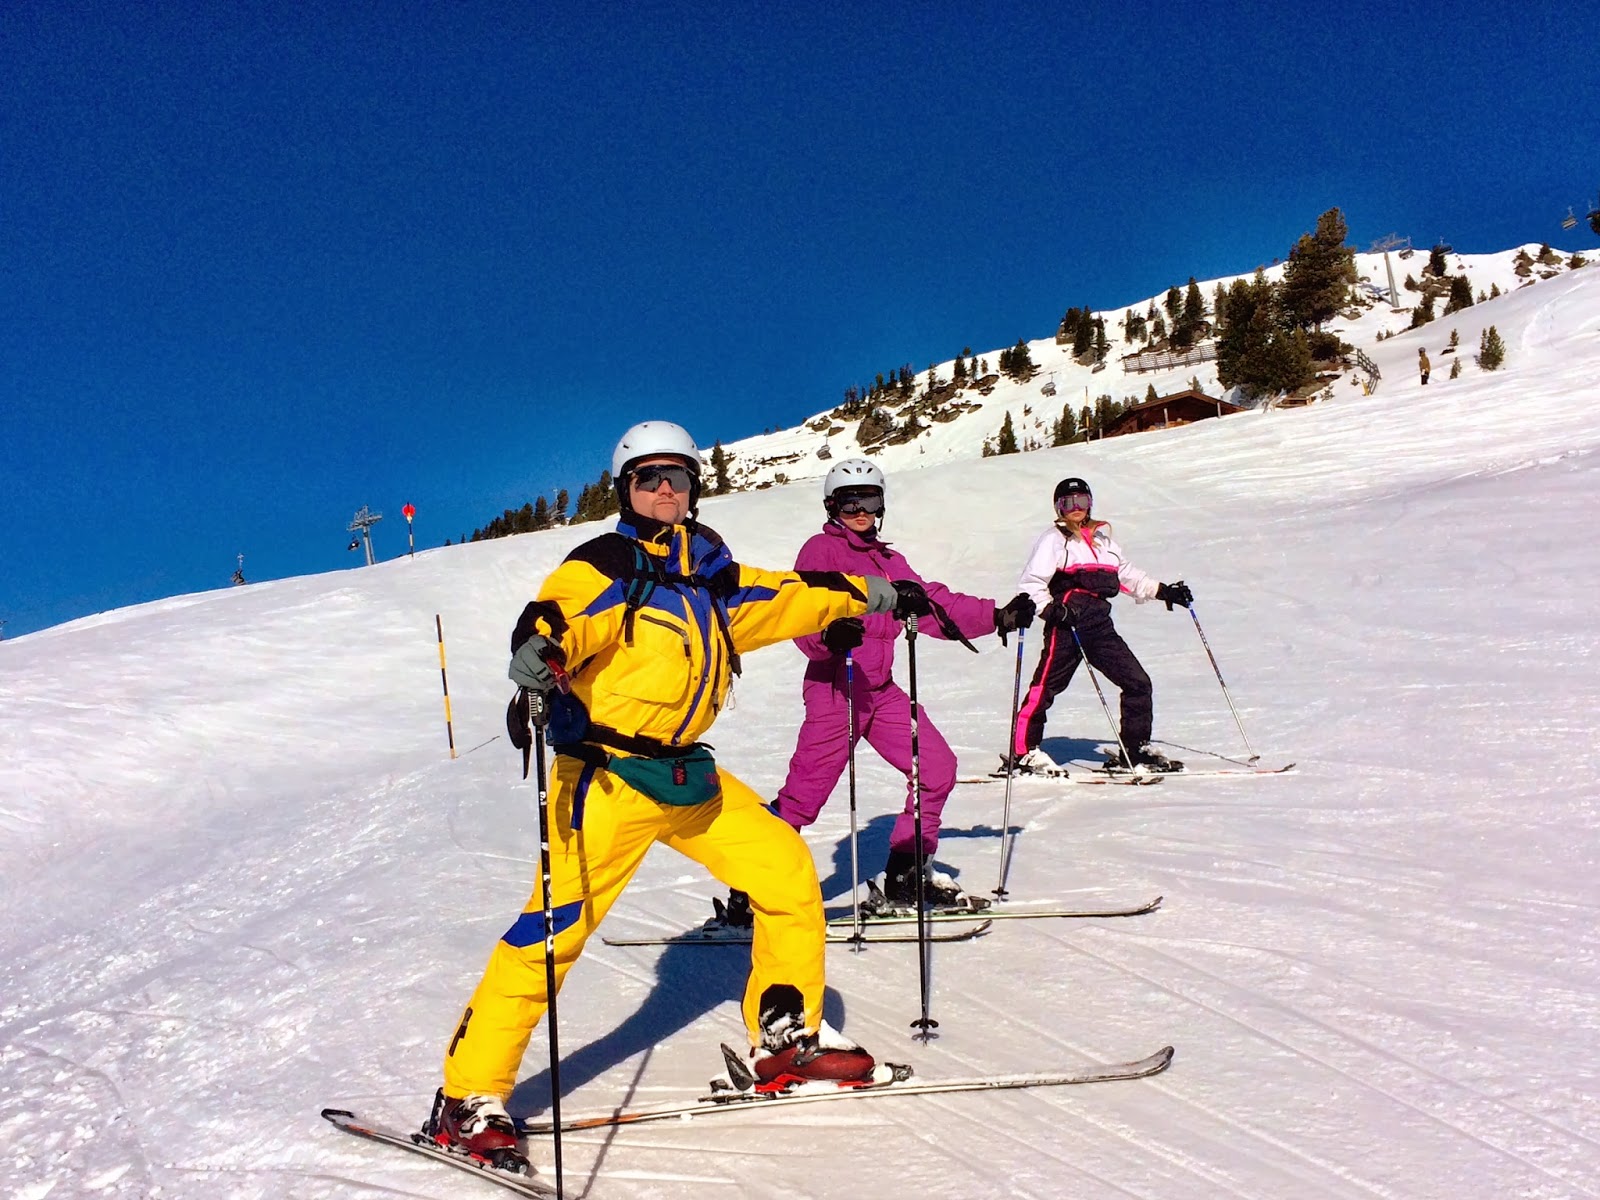 80s fancy dress ski day - Mayrhofen 2014